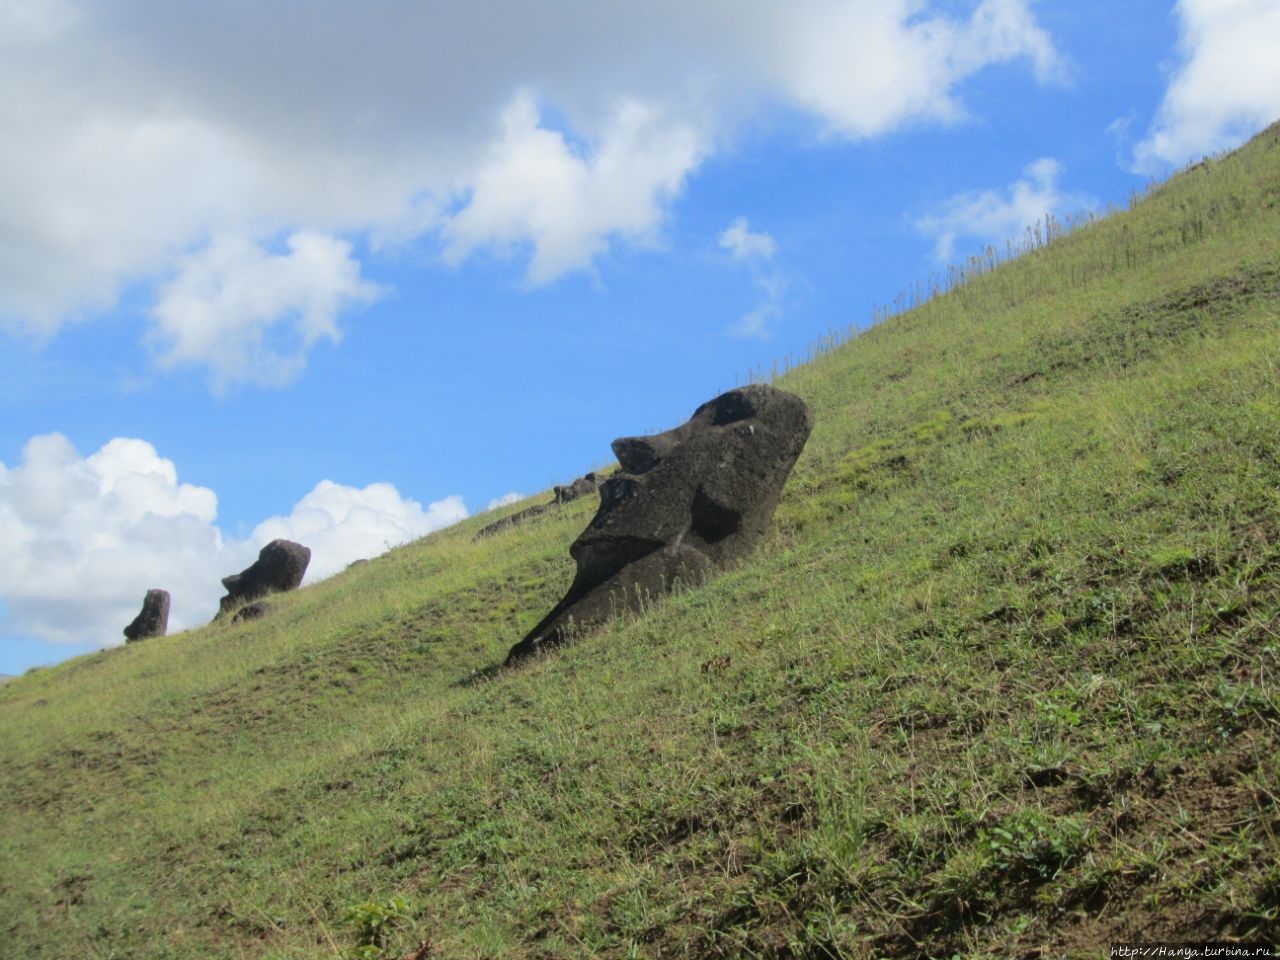 Рано Рараку – колыбель гигантских  моаи. Ч.69